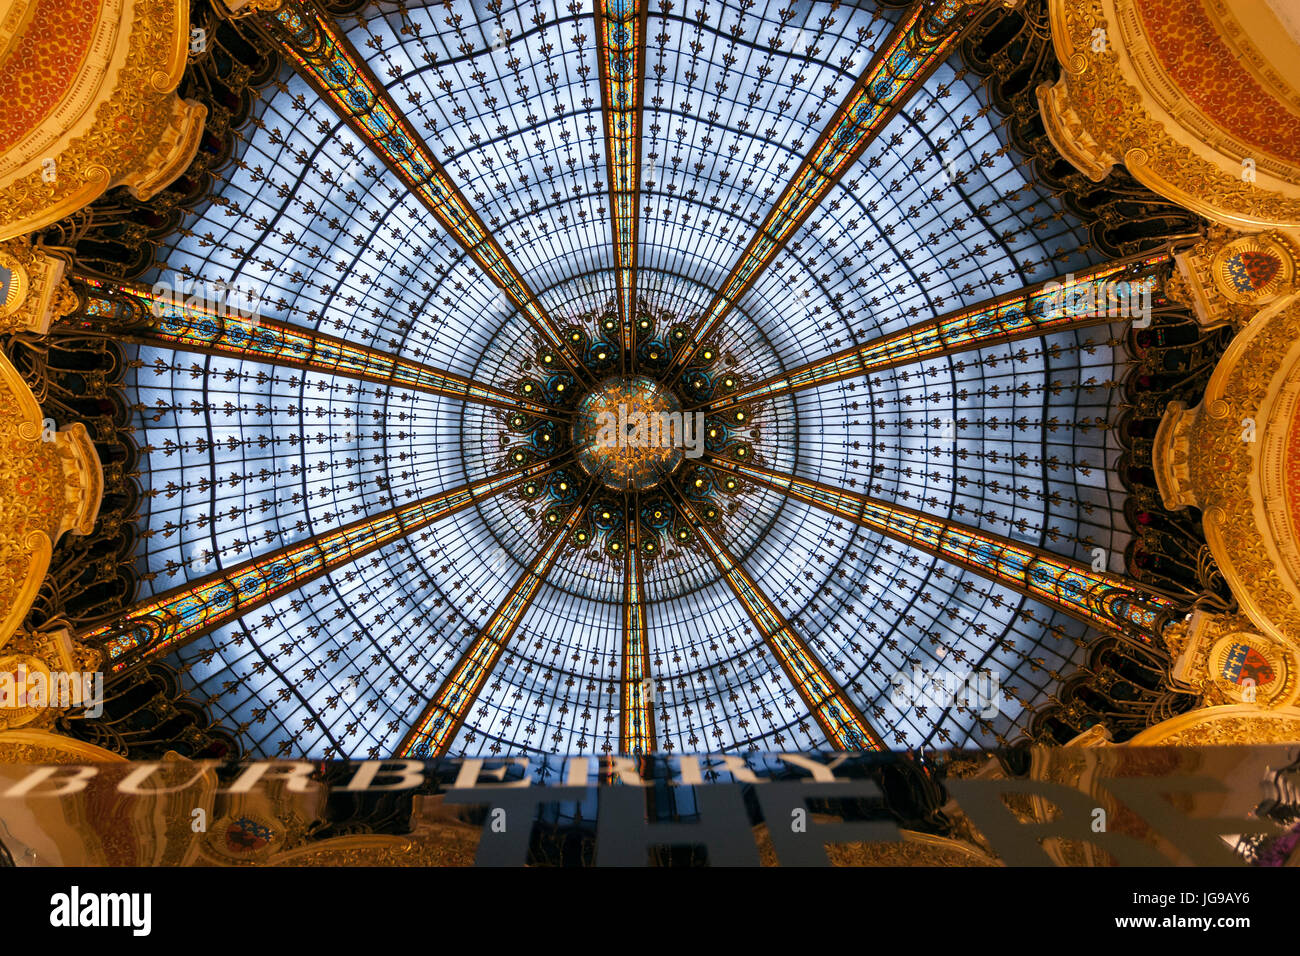 Galeries lafayette paris haussmann hi-res stock photography and images -  Alamy